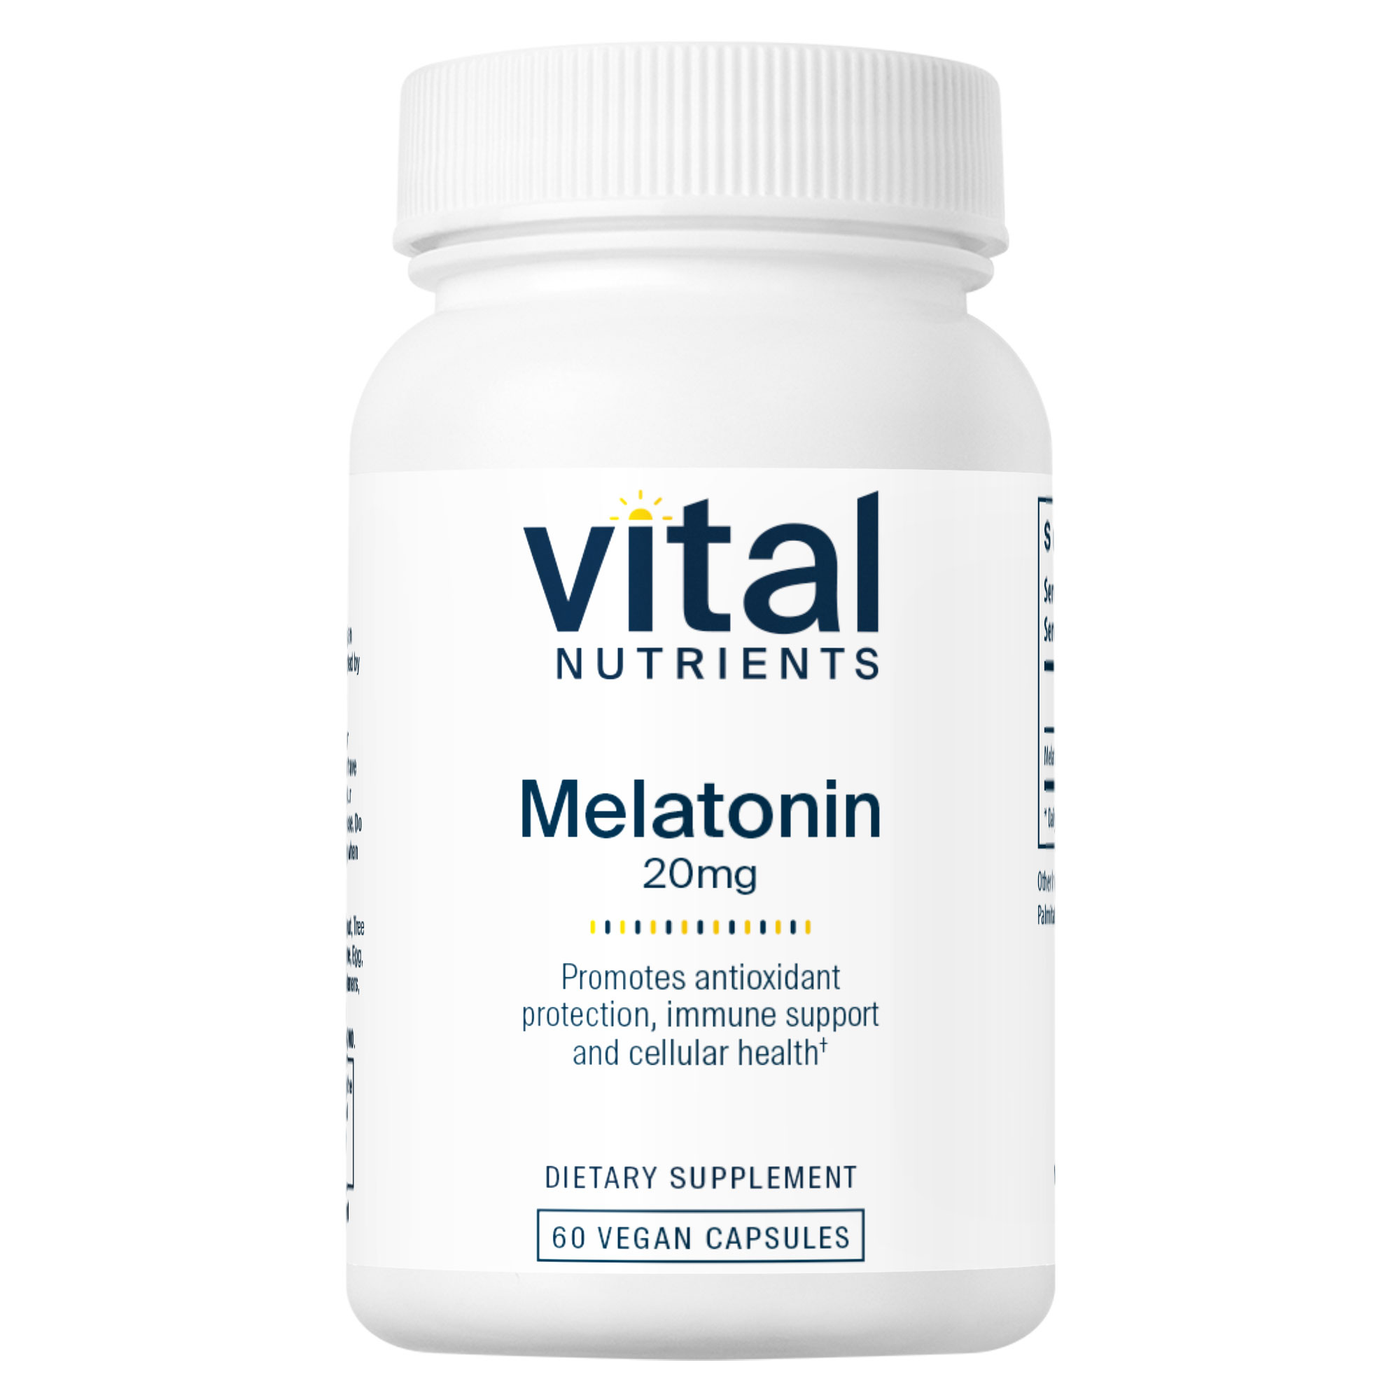 Melatonin 20 mg  Curated Wellness